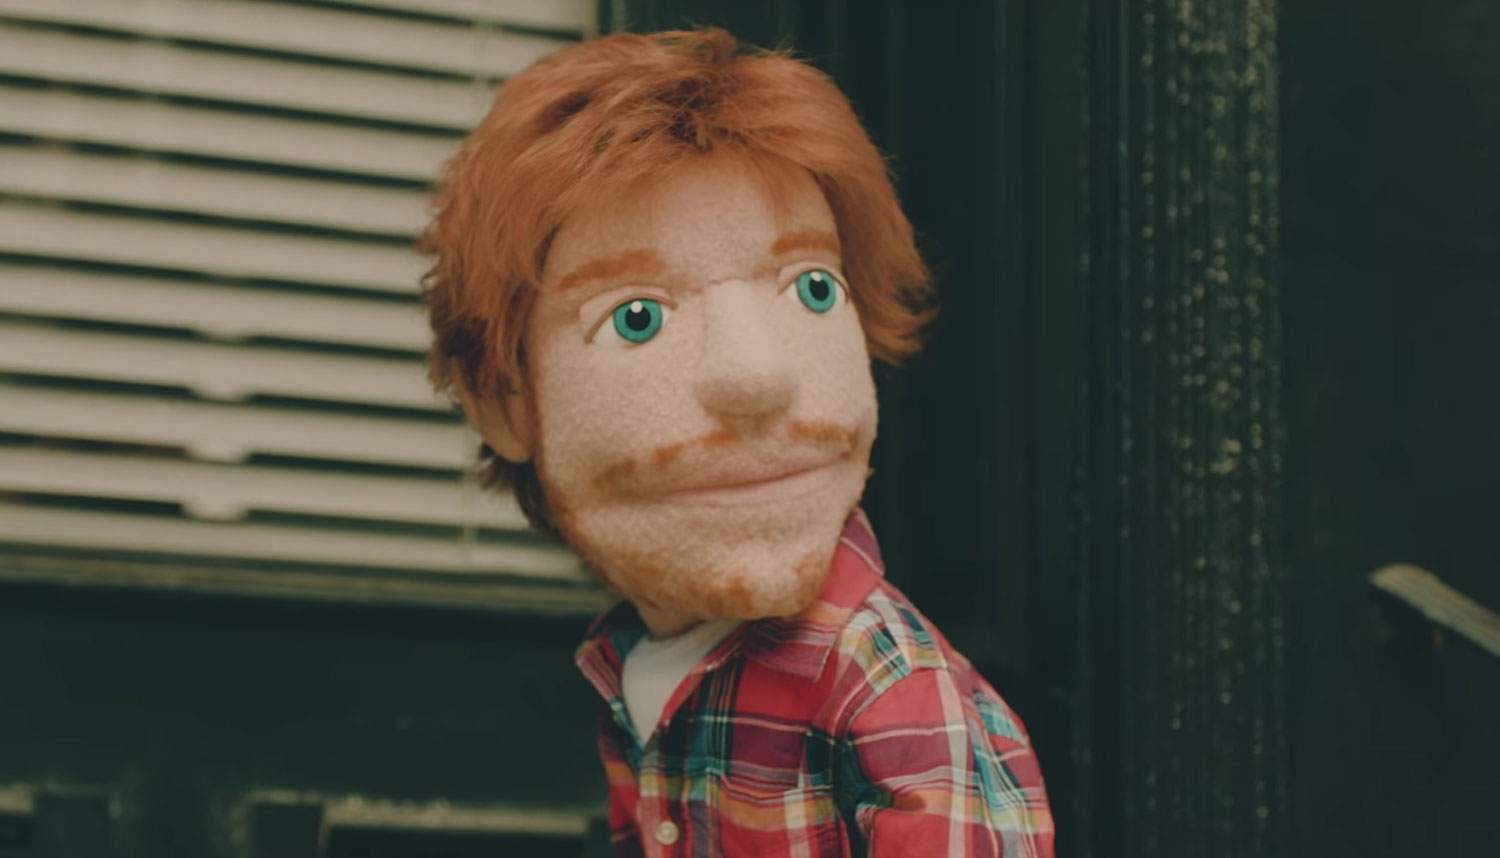 Ed Sheeran Drops 'Happier' Music Video Featuring His Puppet Lookalike –  Watch! | Ed Sheeran, Music, Music Video | Just Jared Jr.